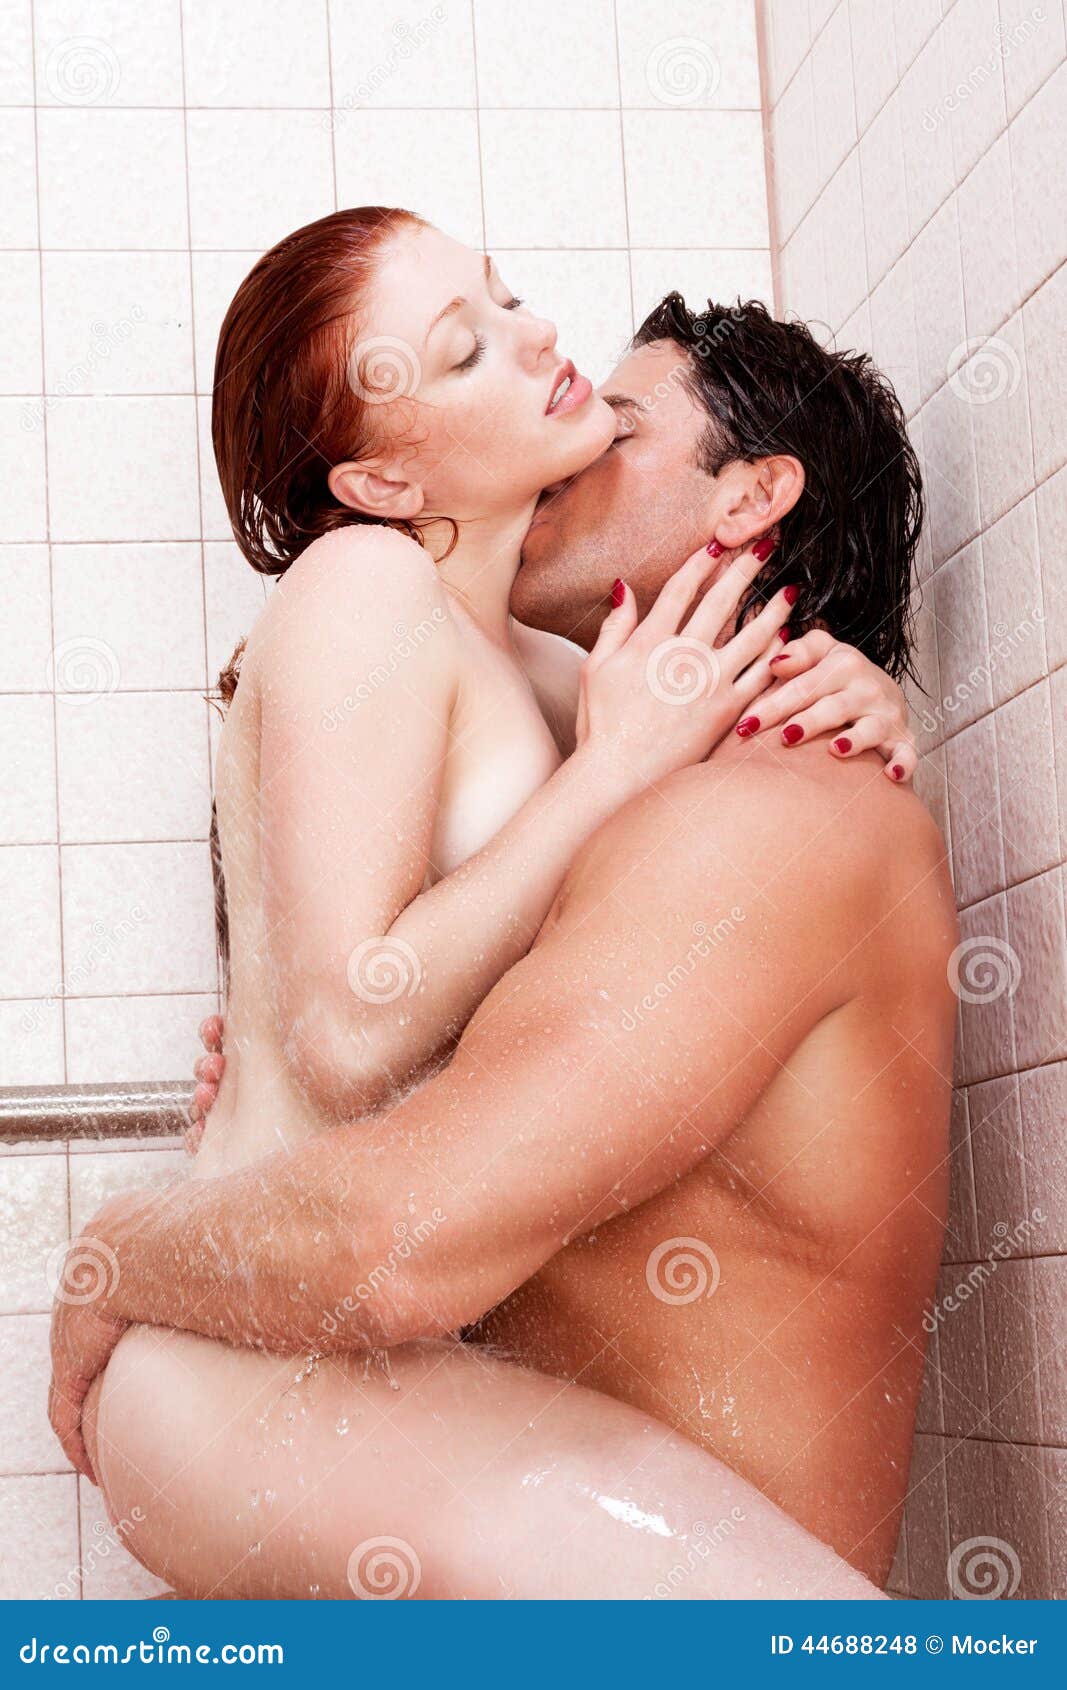 from Brandon photos of men kissing women pussy